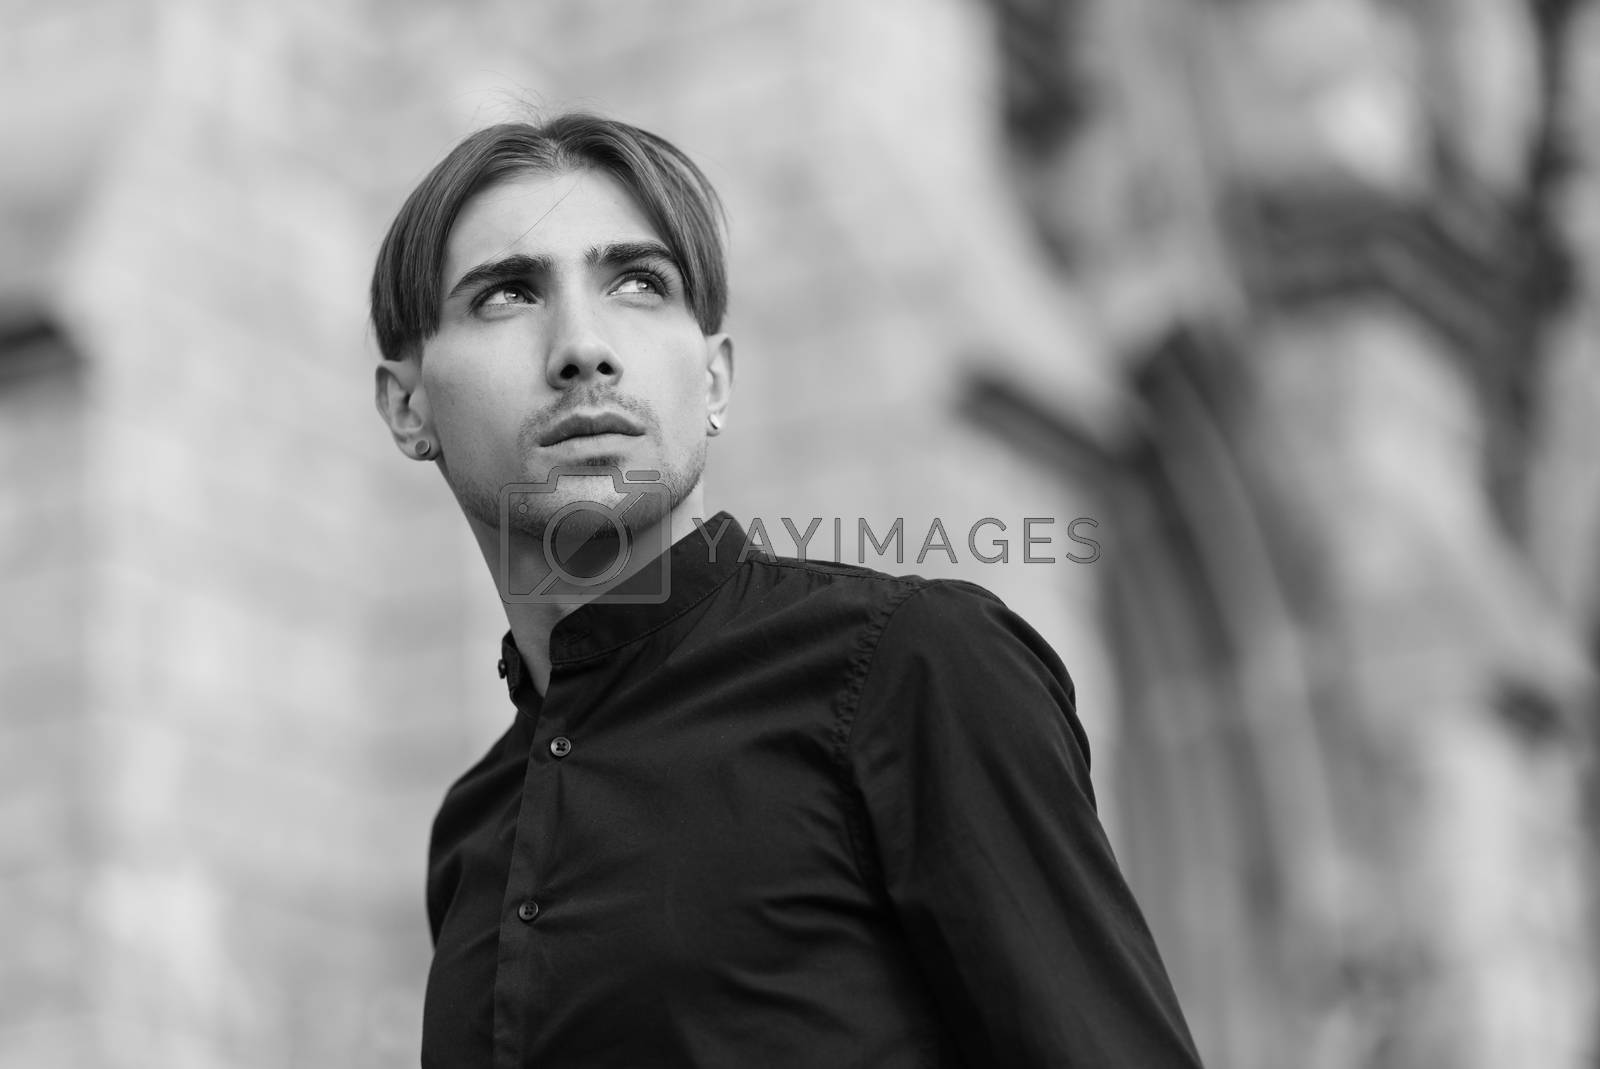 Royalty free image of Portrait of a gay man - member of the LGBTQ community. Black and white photo. BW by Mykola_Kondrashev